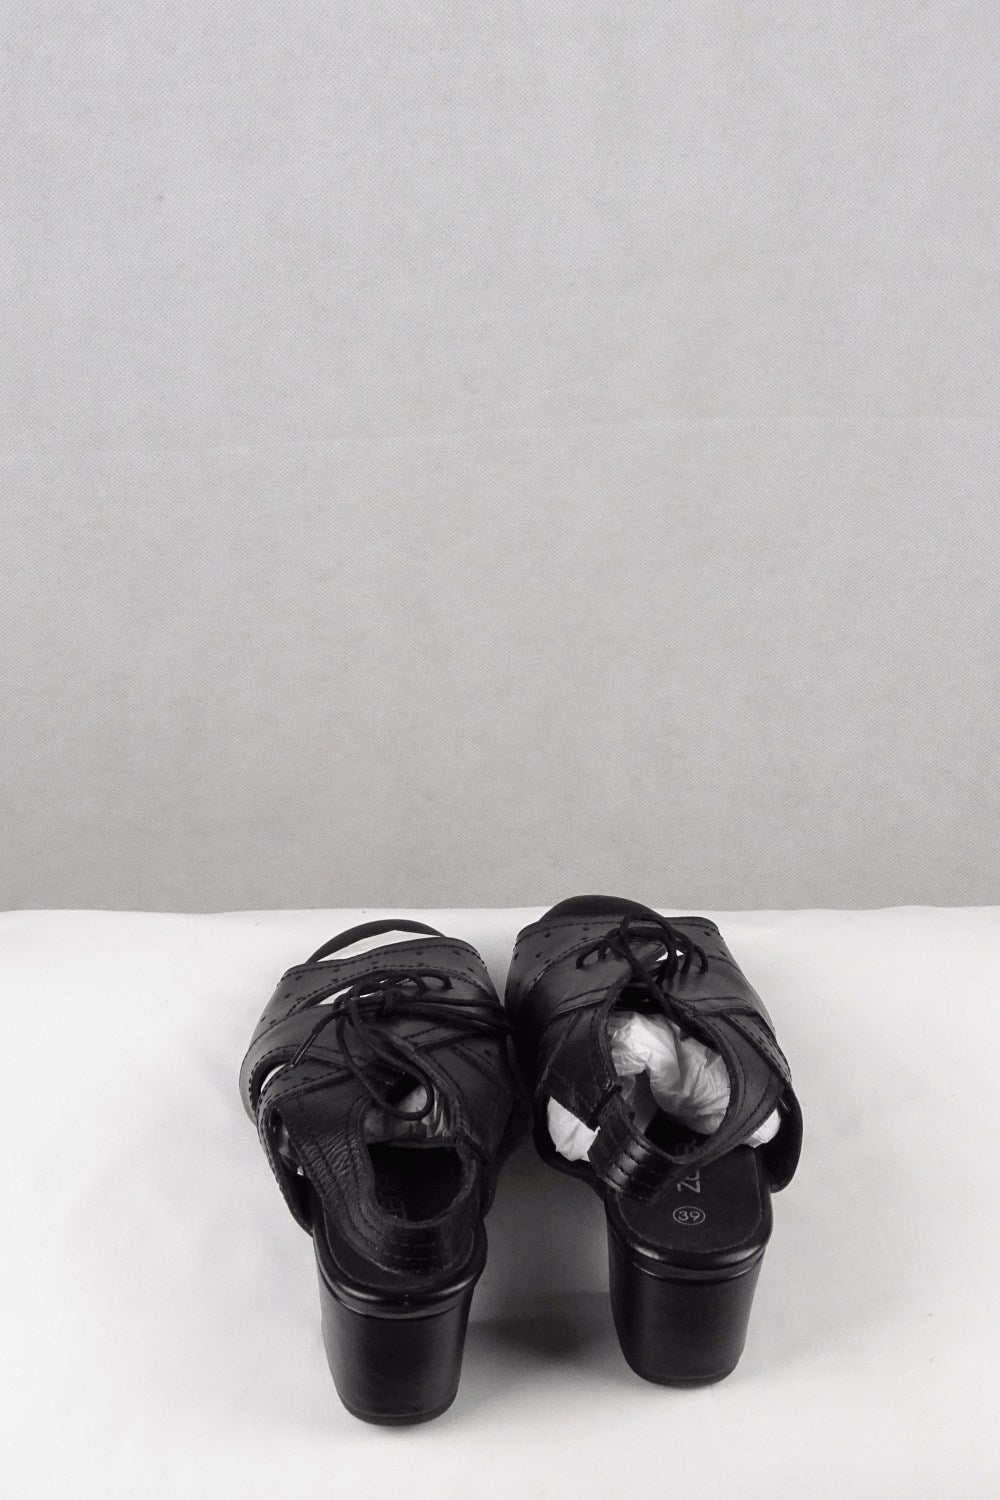 Zenzu Black Sandals 39